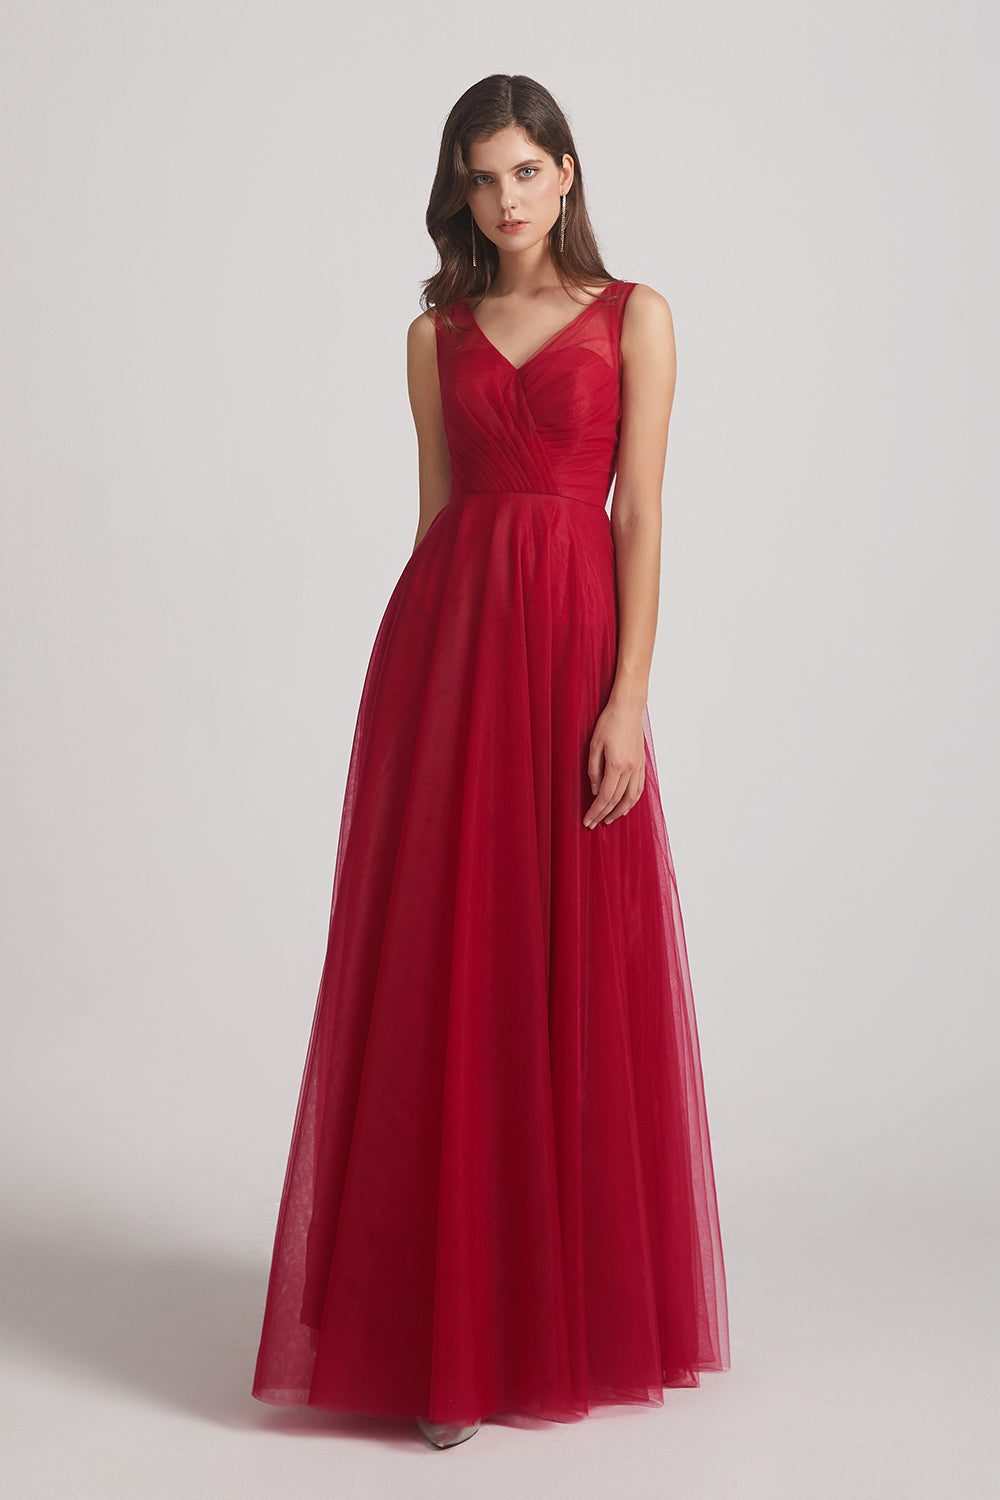 burgundy tulle bridesmaid dresses